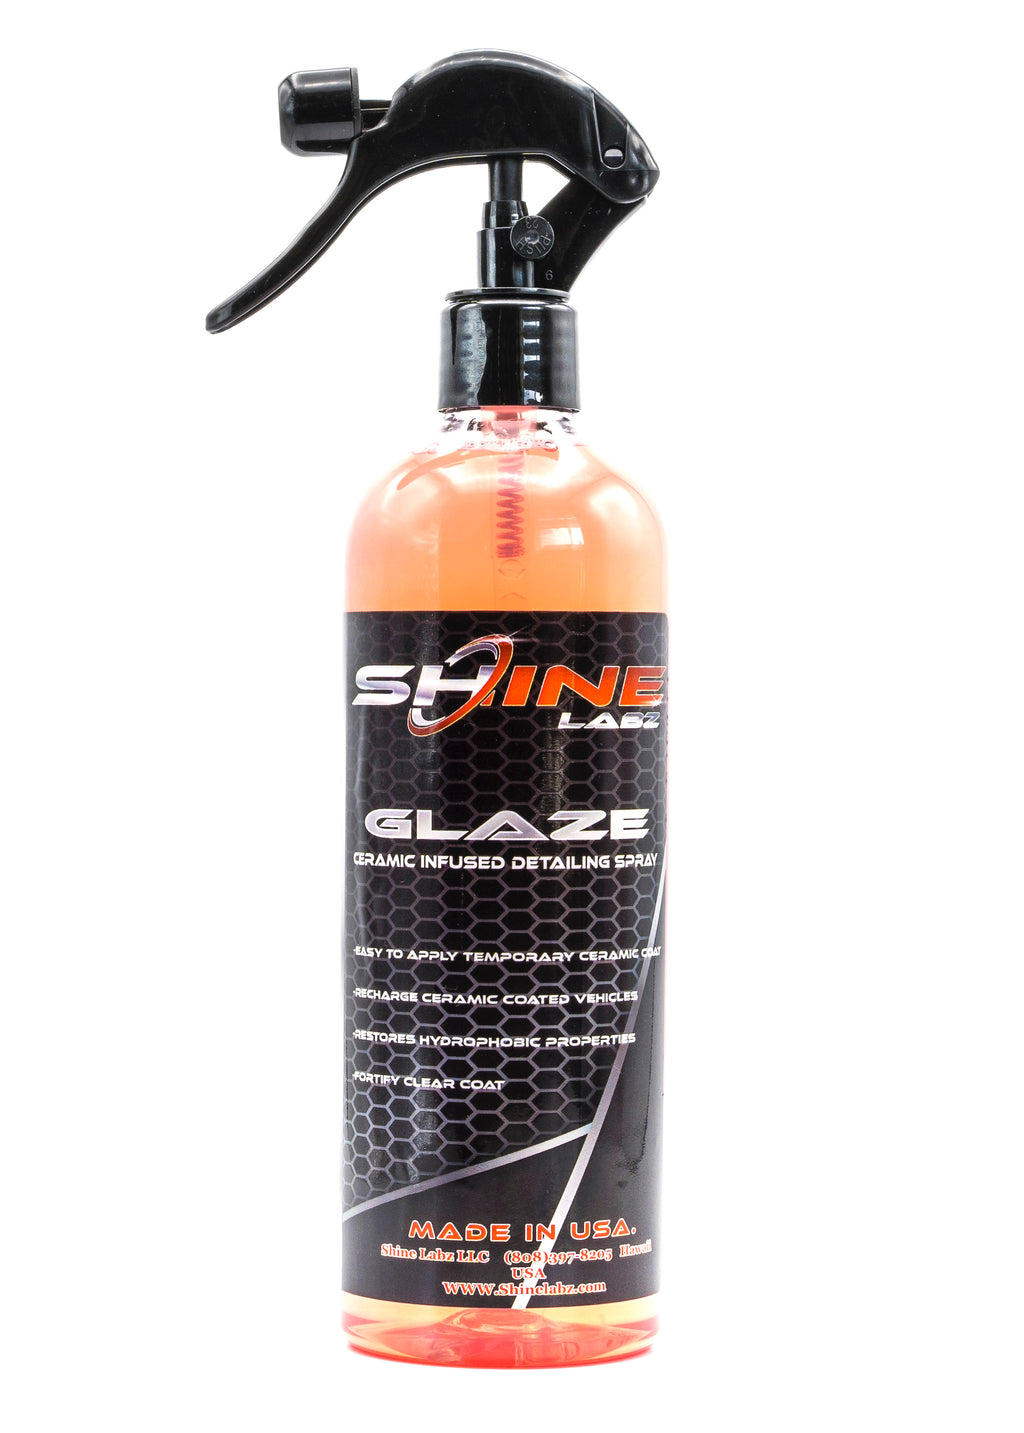 Glaze - Ceramic Infused Detailing Spray